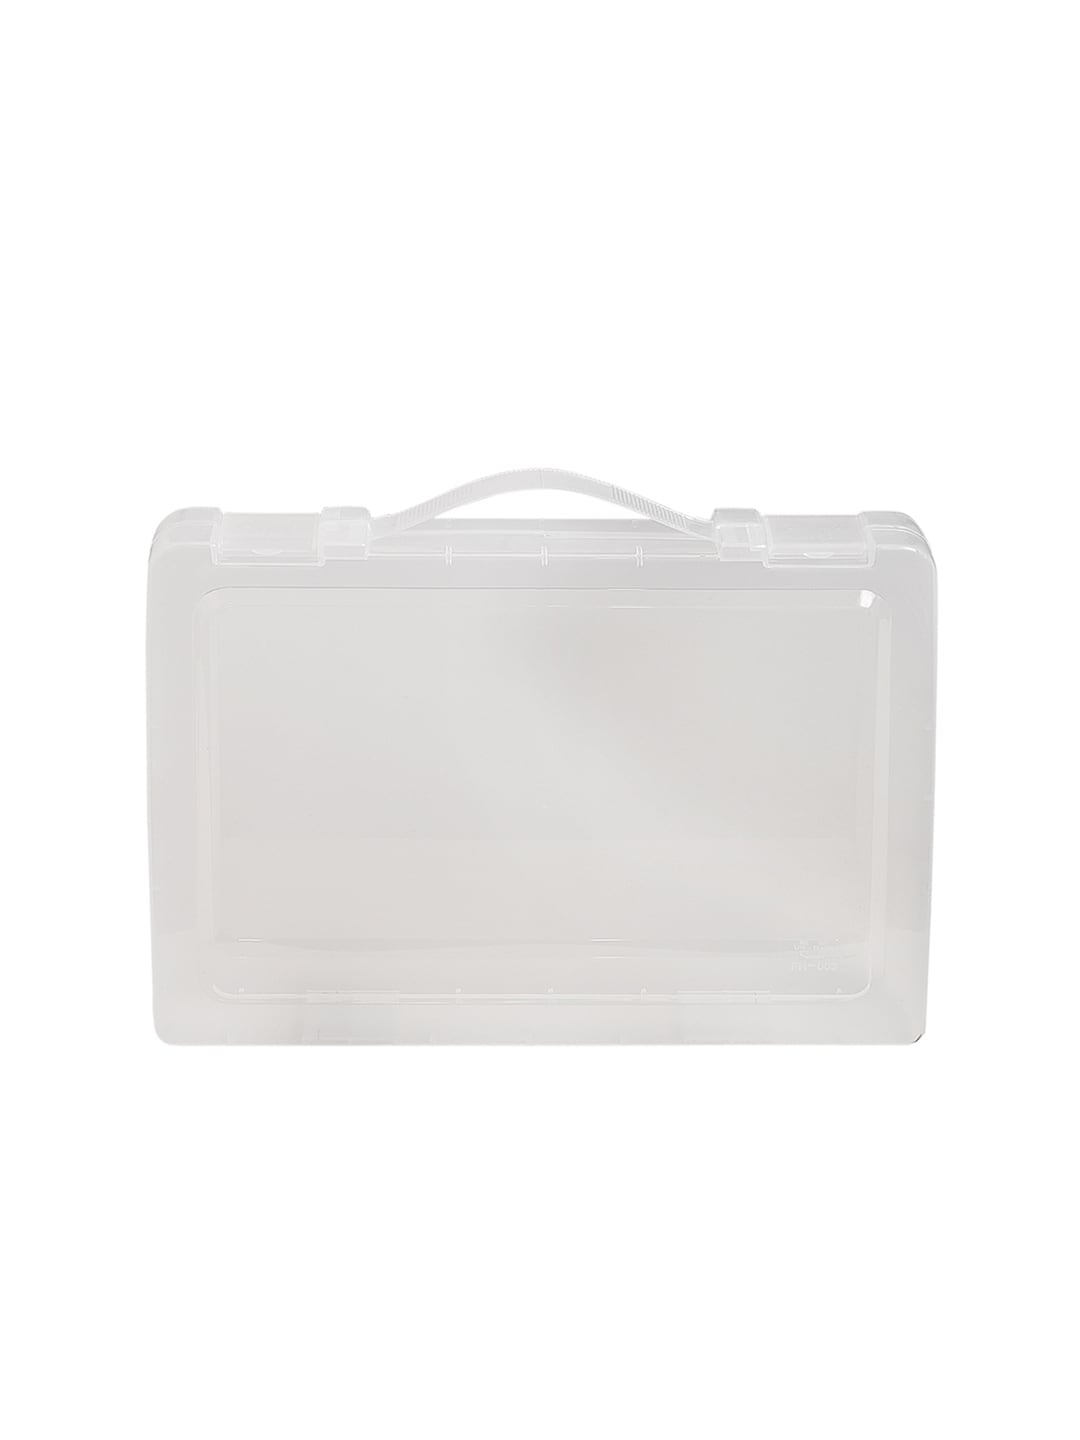 NOW & ZEN Transparent Portable A4 File Folder Box Price in India